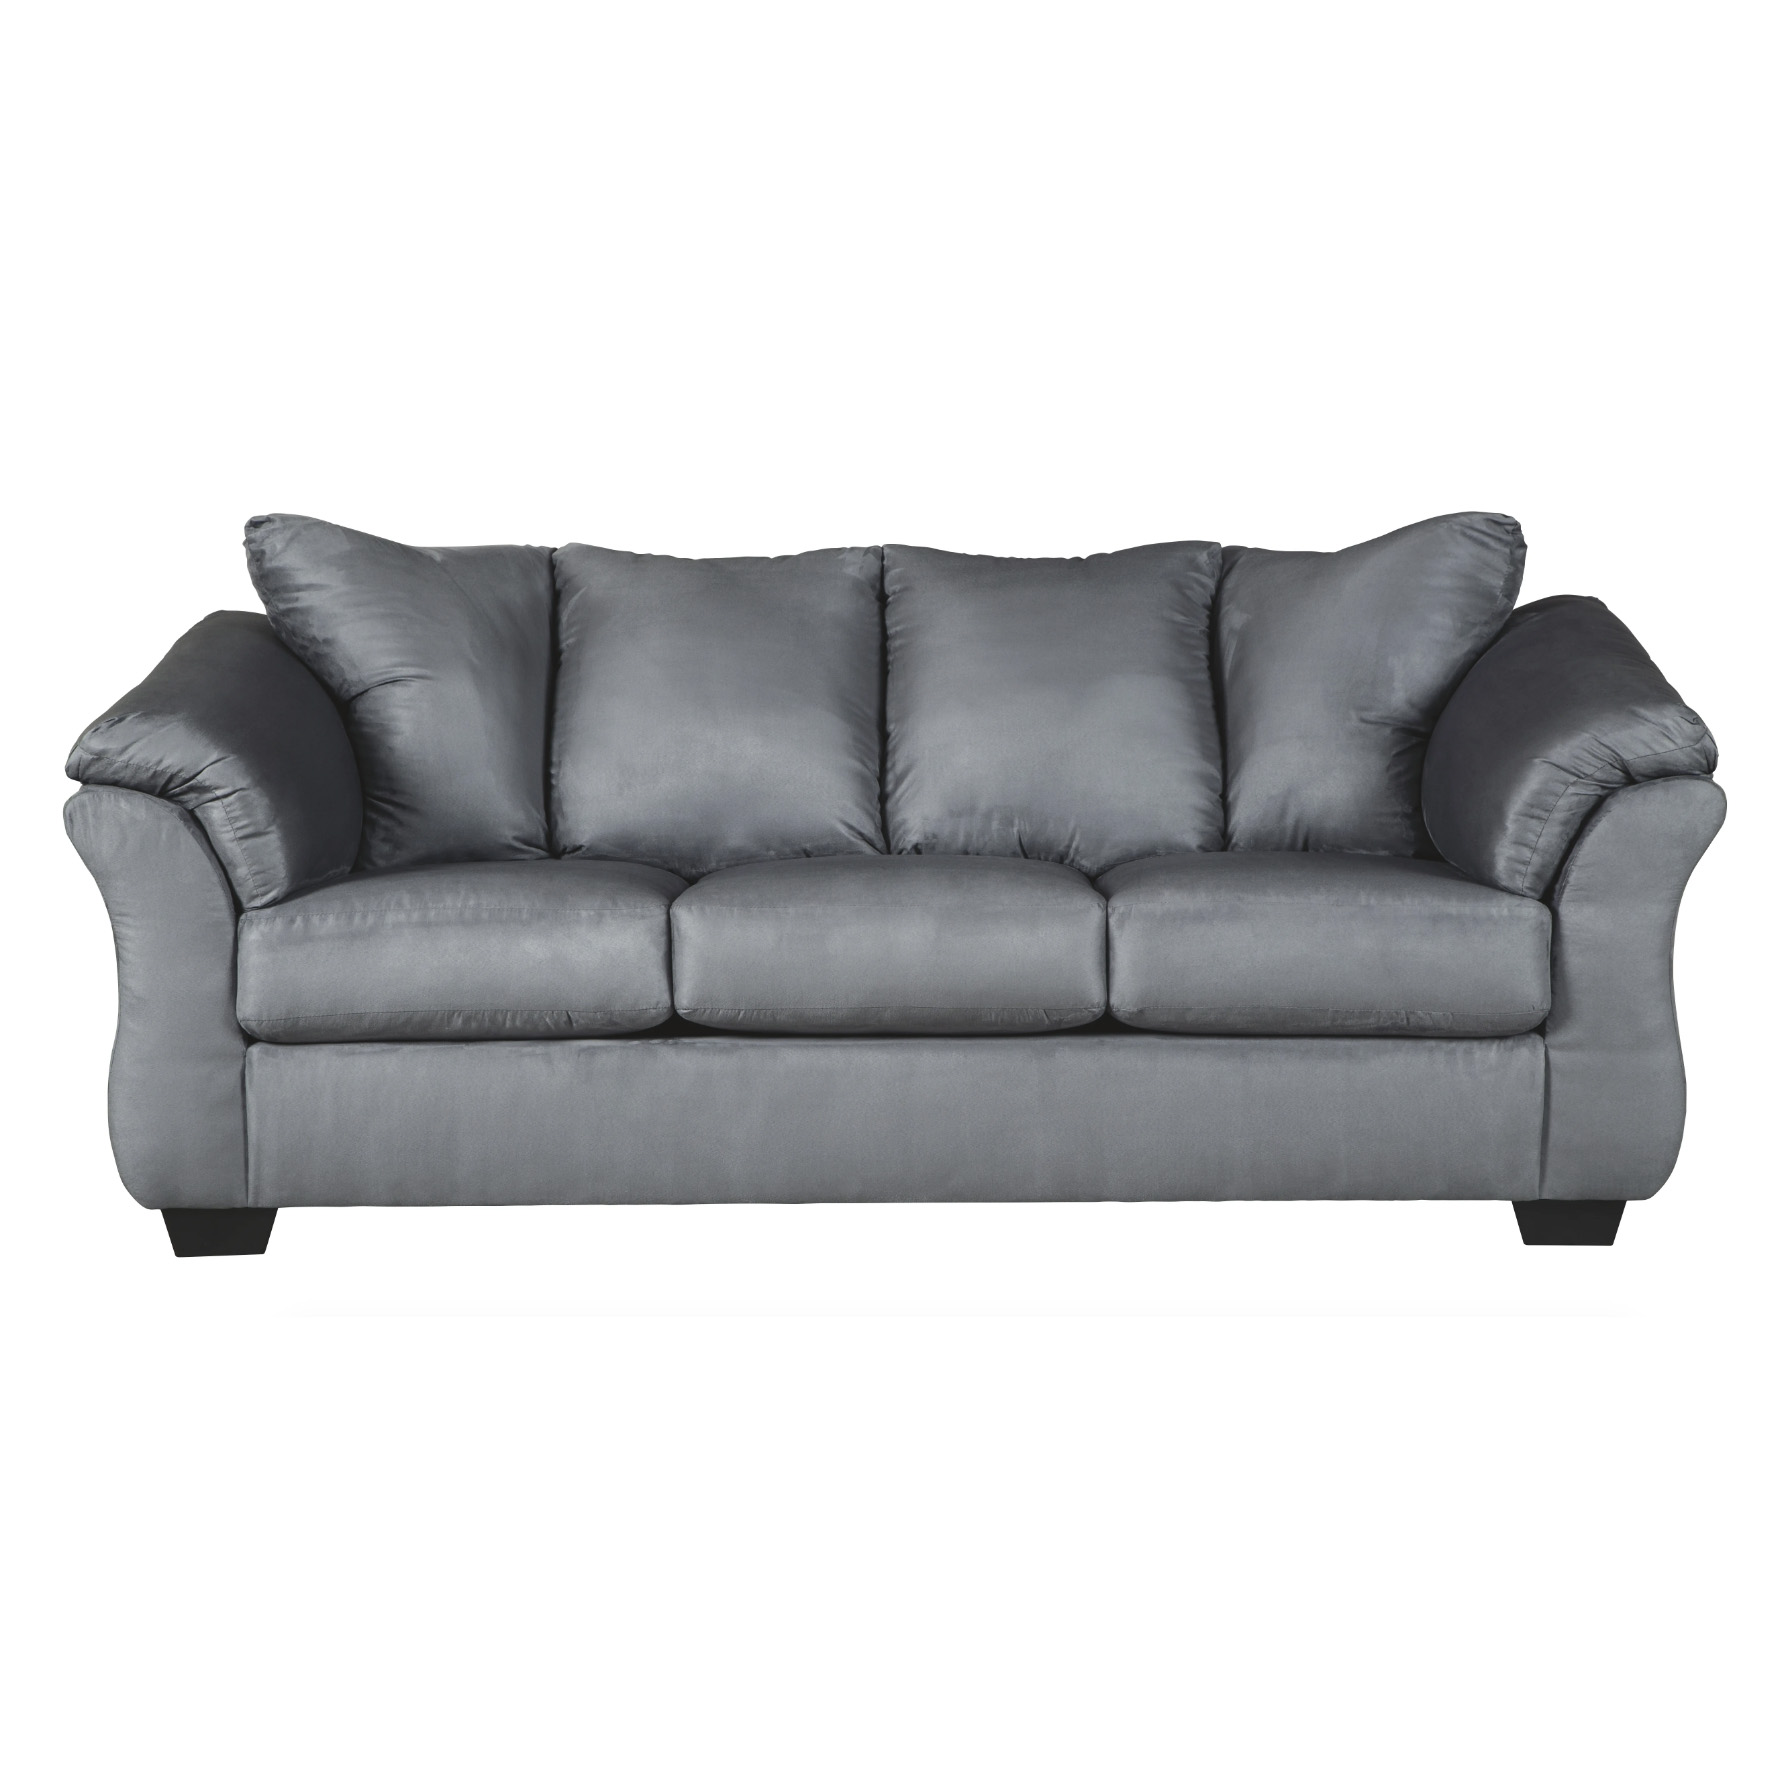 Darcy - Steel - Sofa